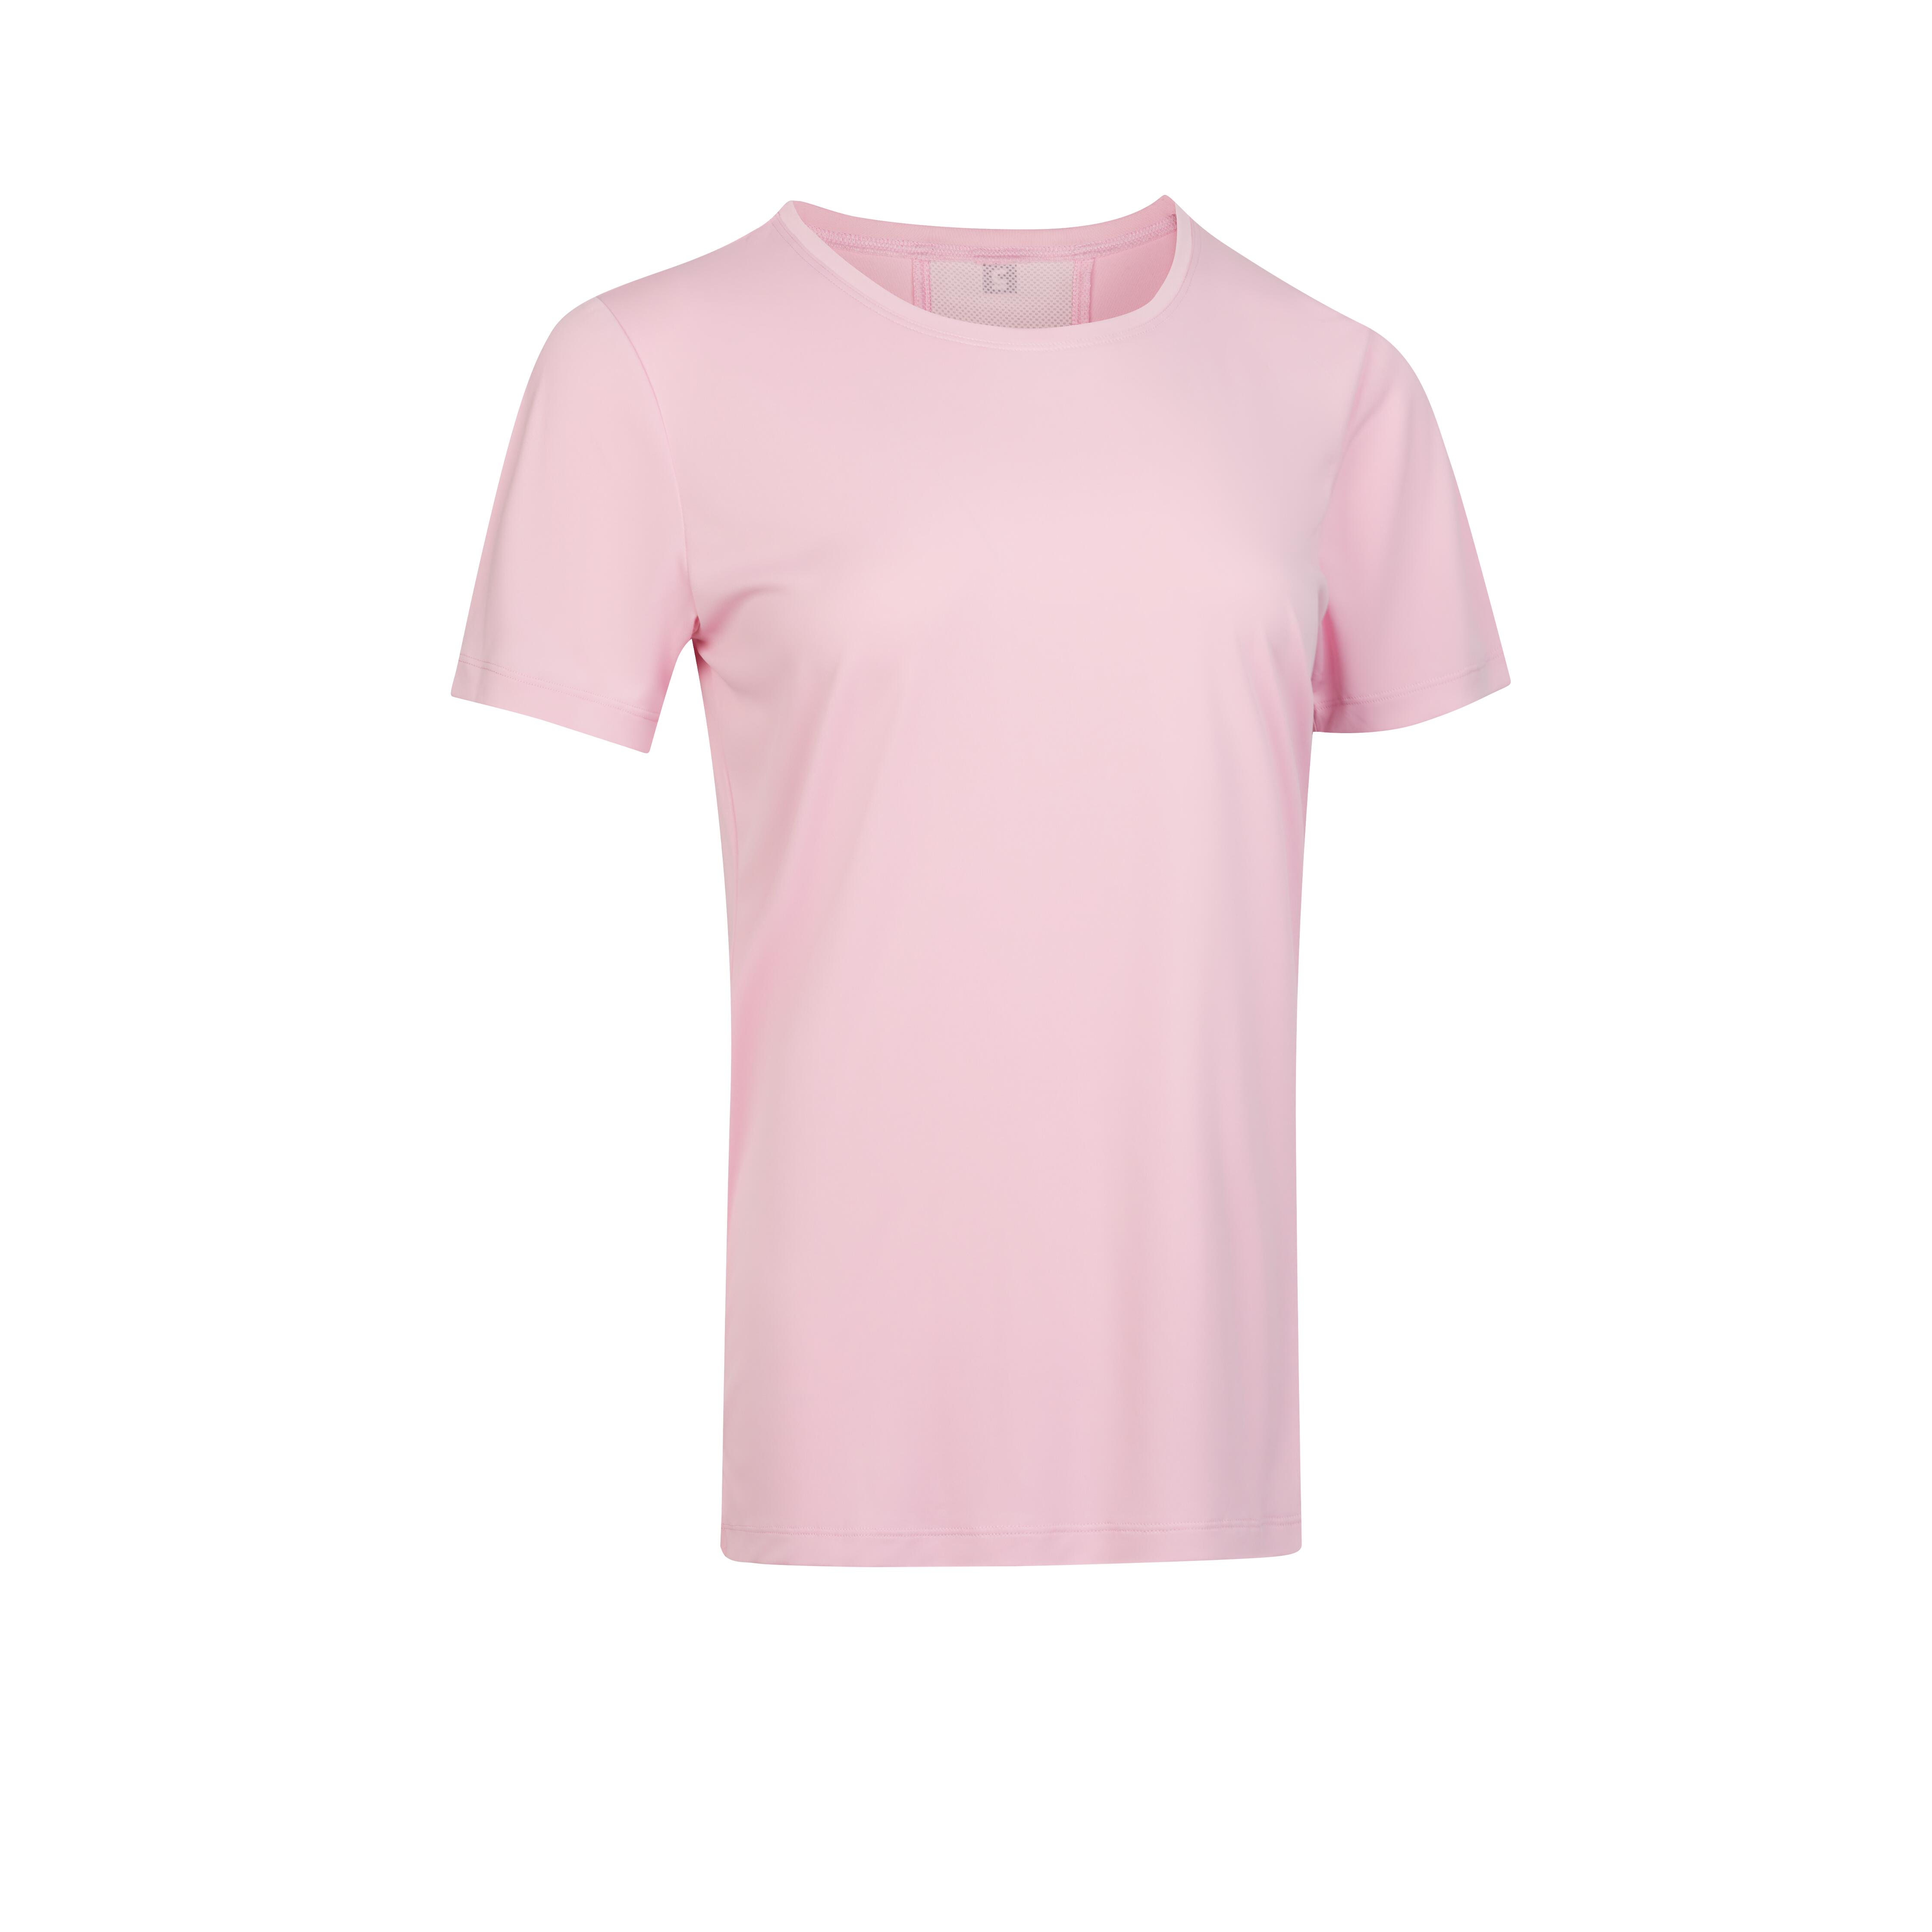 https://contents.mediadecathlon.com/p2532977/87b376127eaae2c8b925d01c7d6fd724ad5262893a7f8324a6449870c8327733/womens-fitness-t-shirt-fts-120-pink.jpg